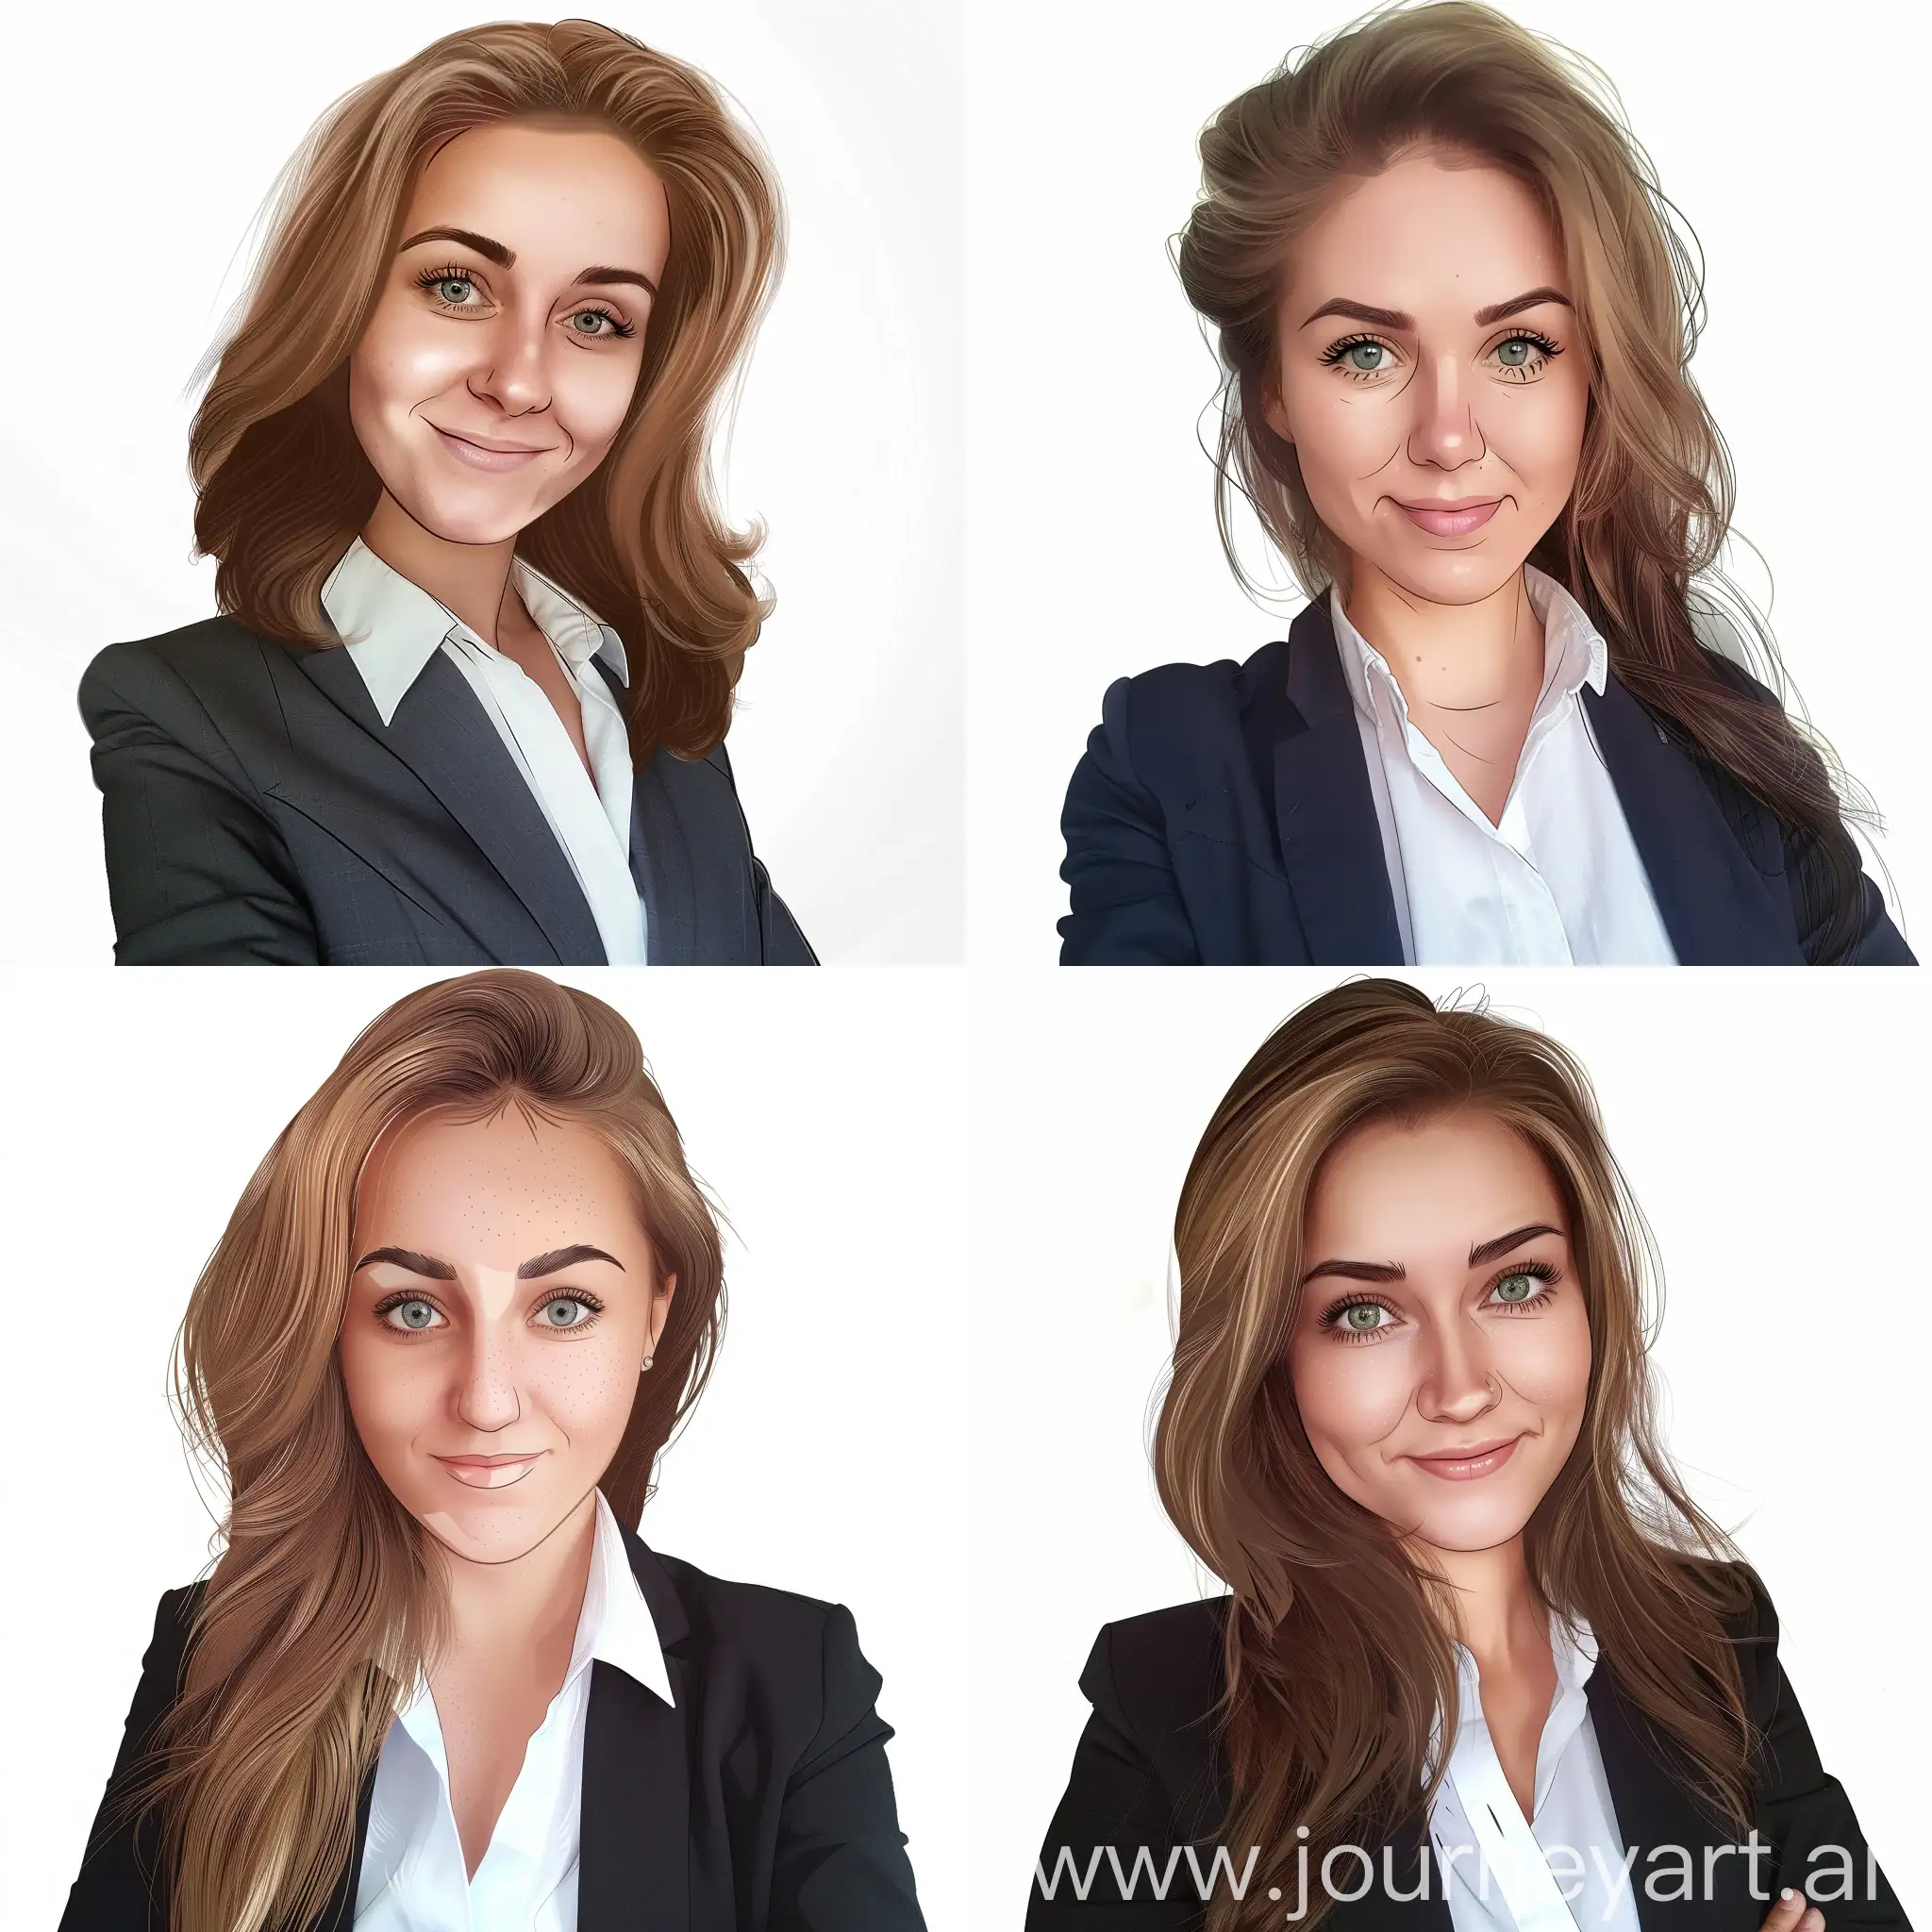 Cartoon-Realistic-Style-Joyful-Businesswoman-with-Full-Face-Portrait